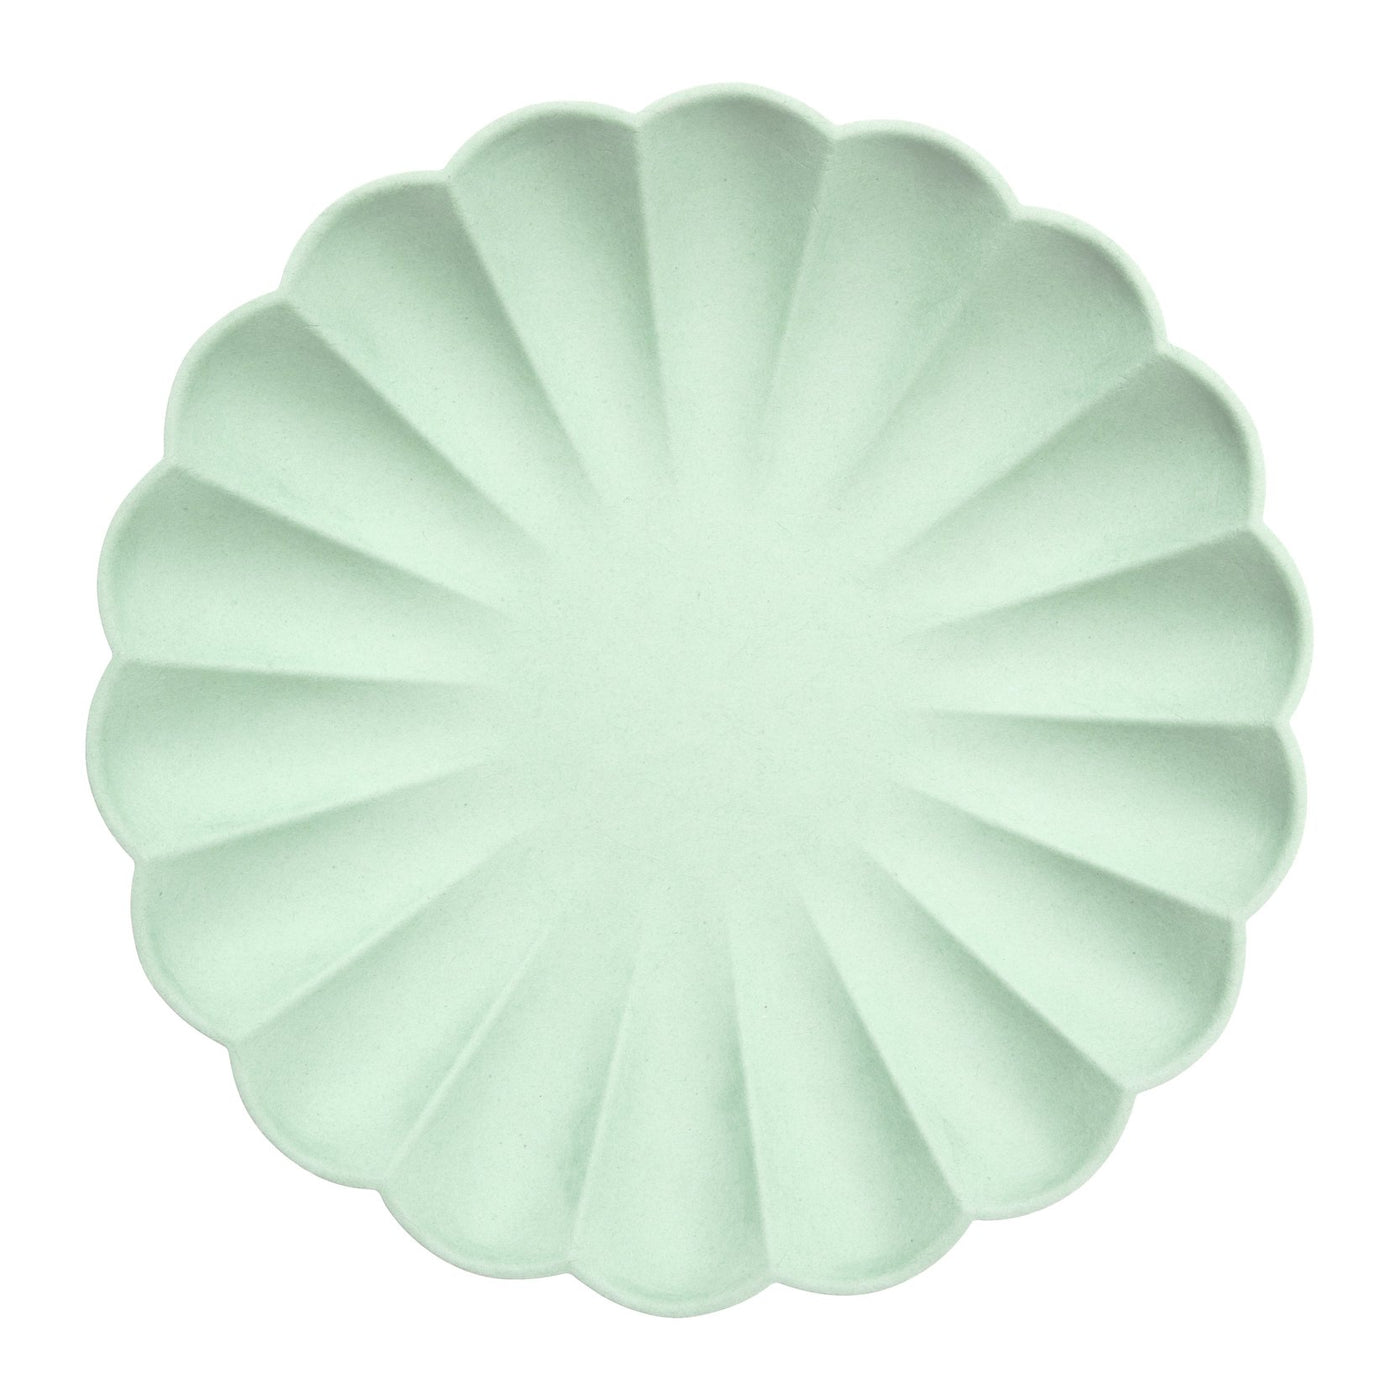 Pale Mint Simply Eco Plates